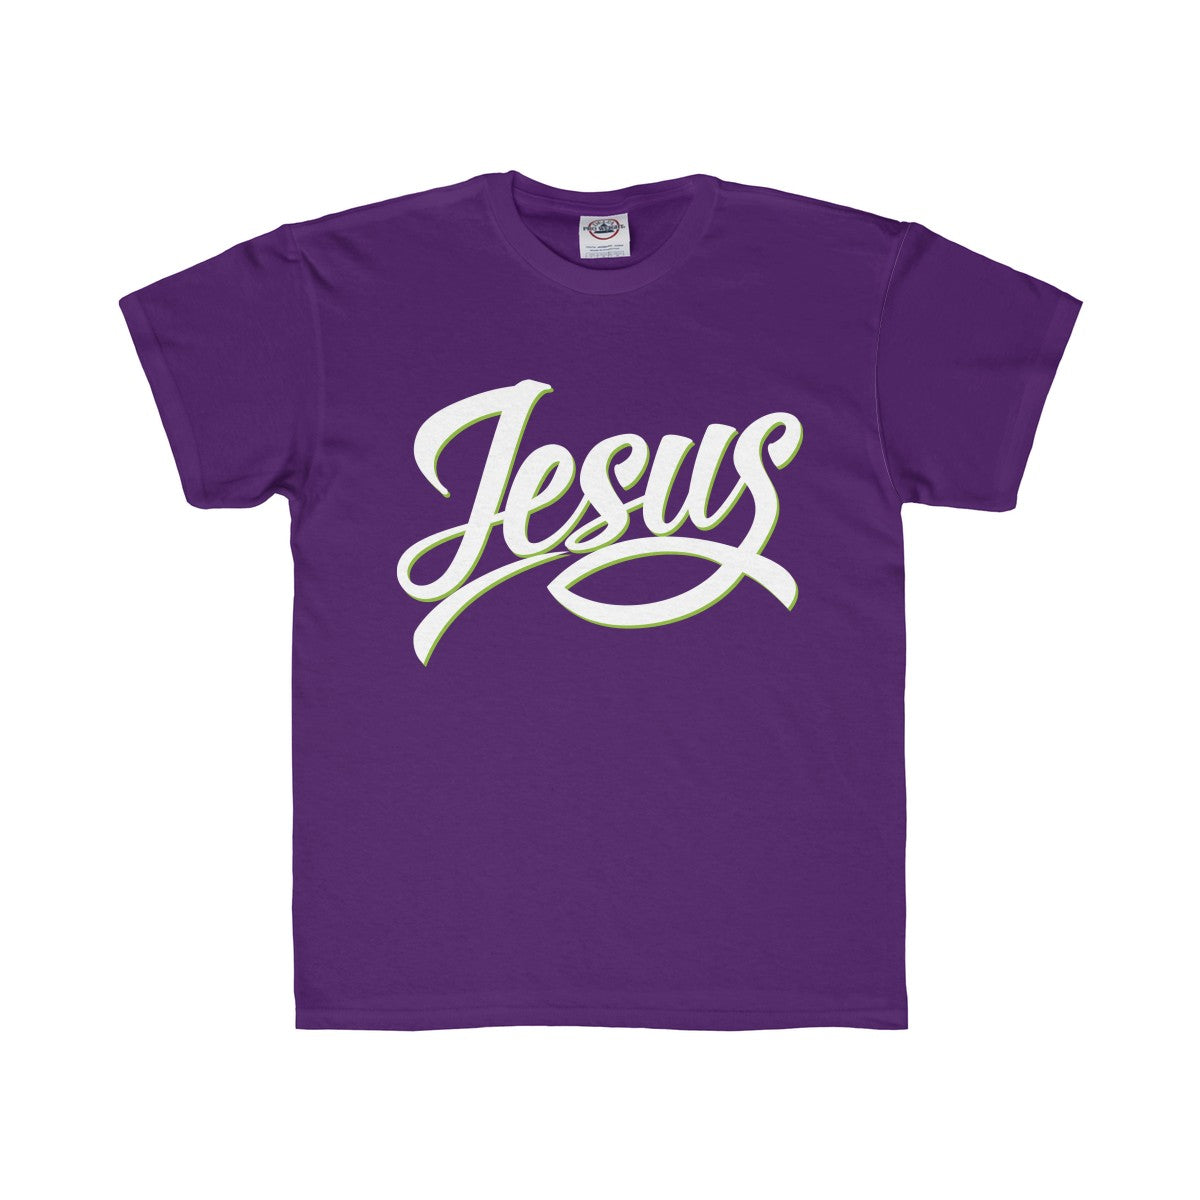 Jesus with Fish Design Kids Regular Fit Tee-Kids clothes-PureDesignTees